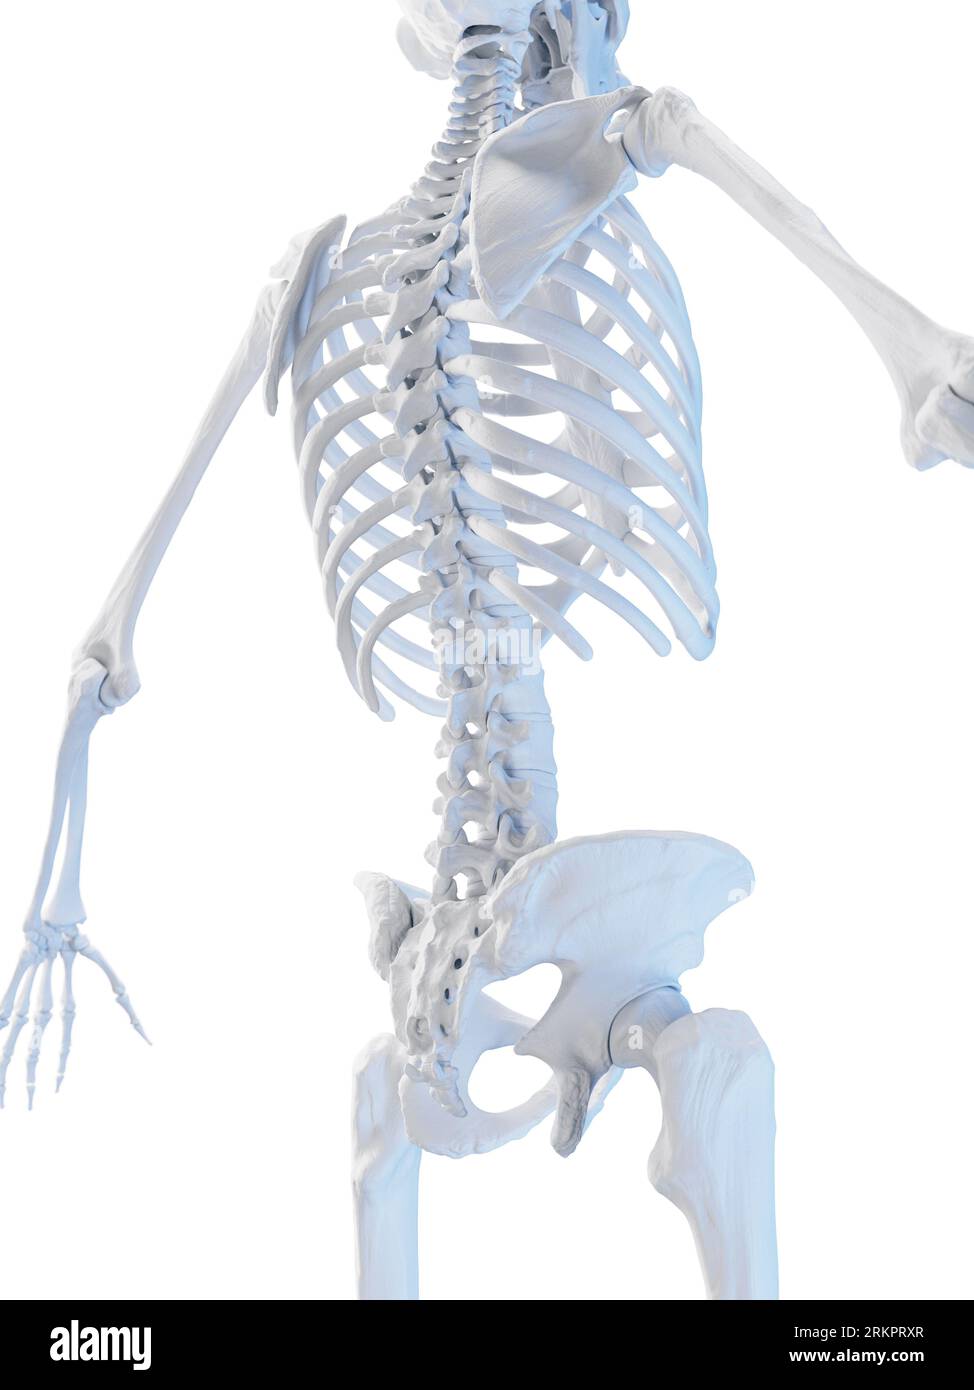 Skeletal system, illustration. Stock Photo